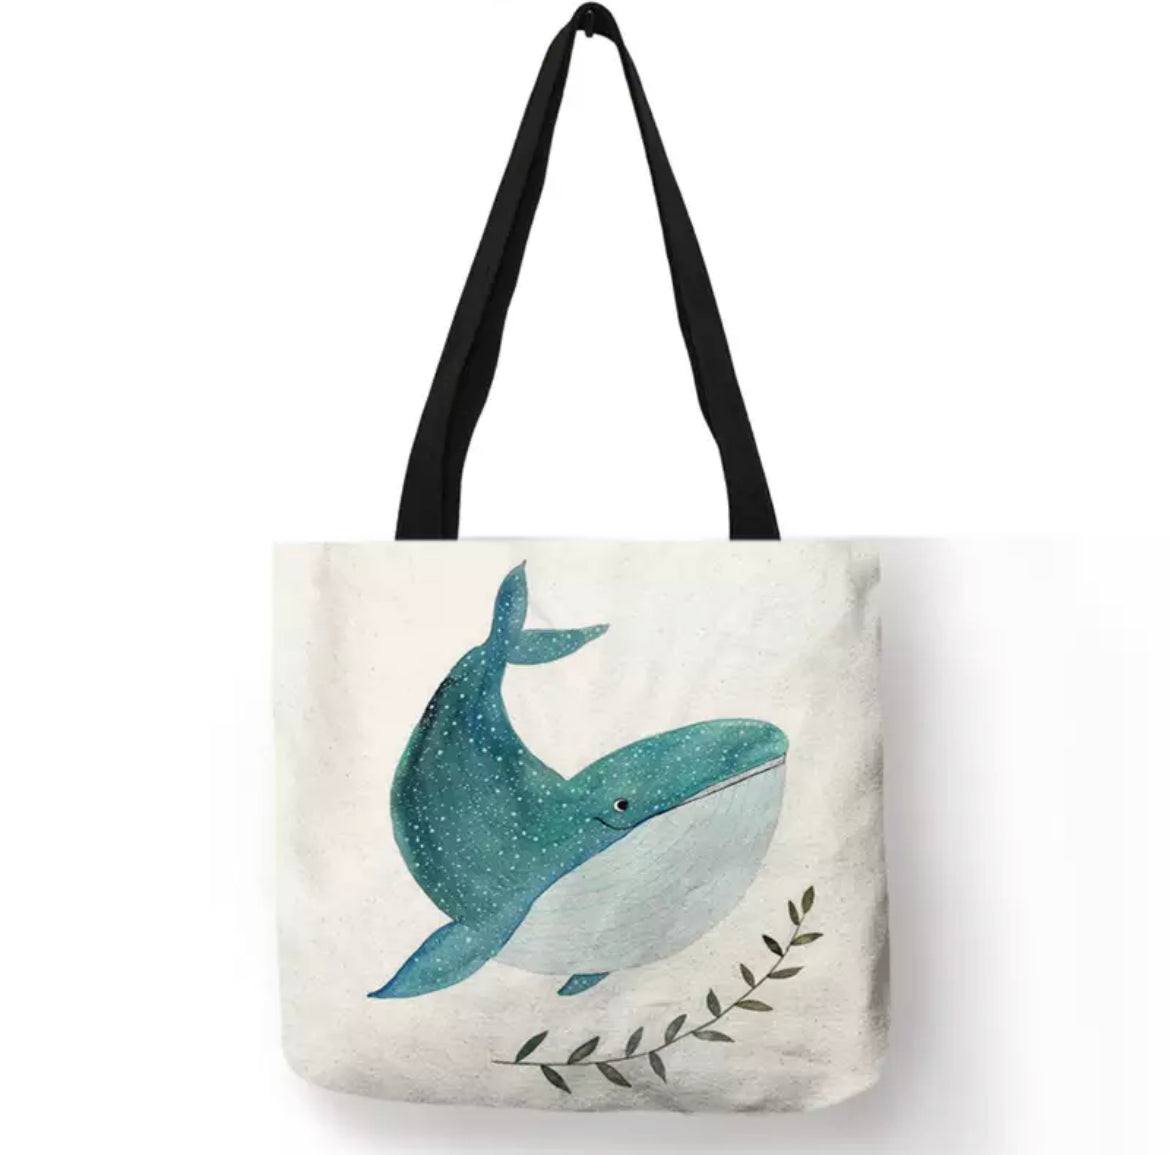 Whale tote bag